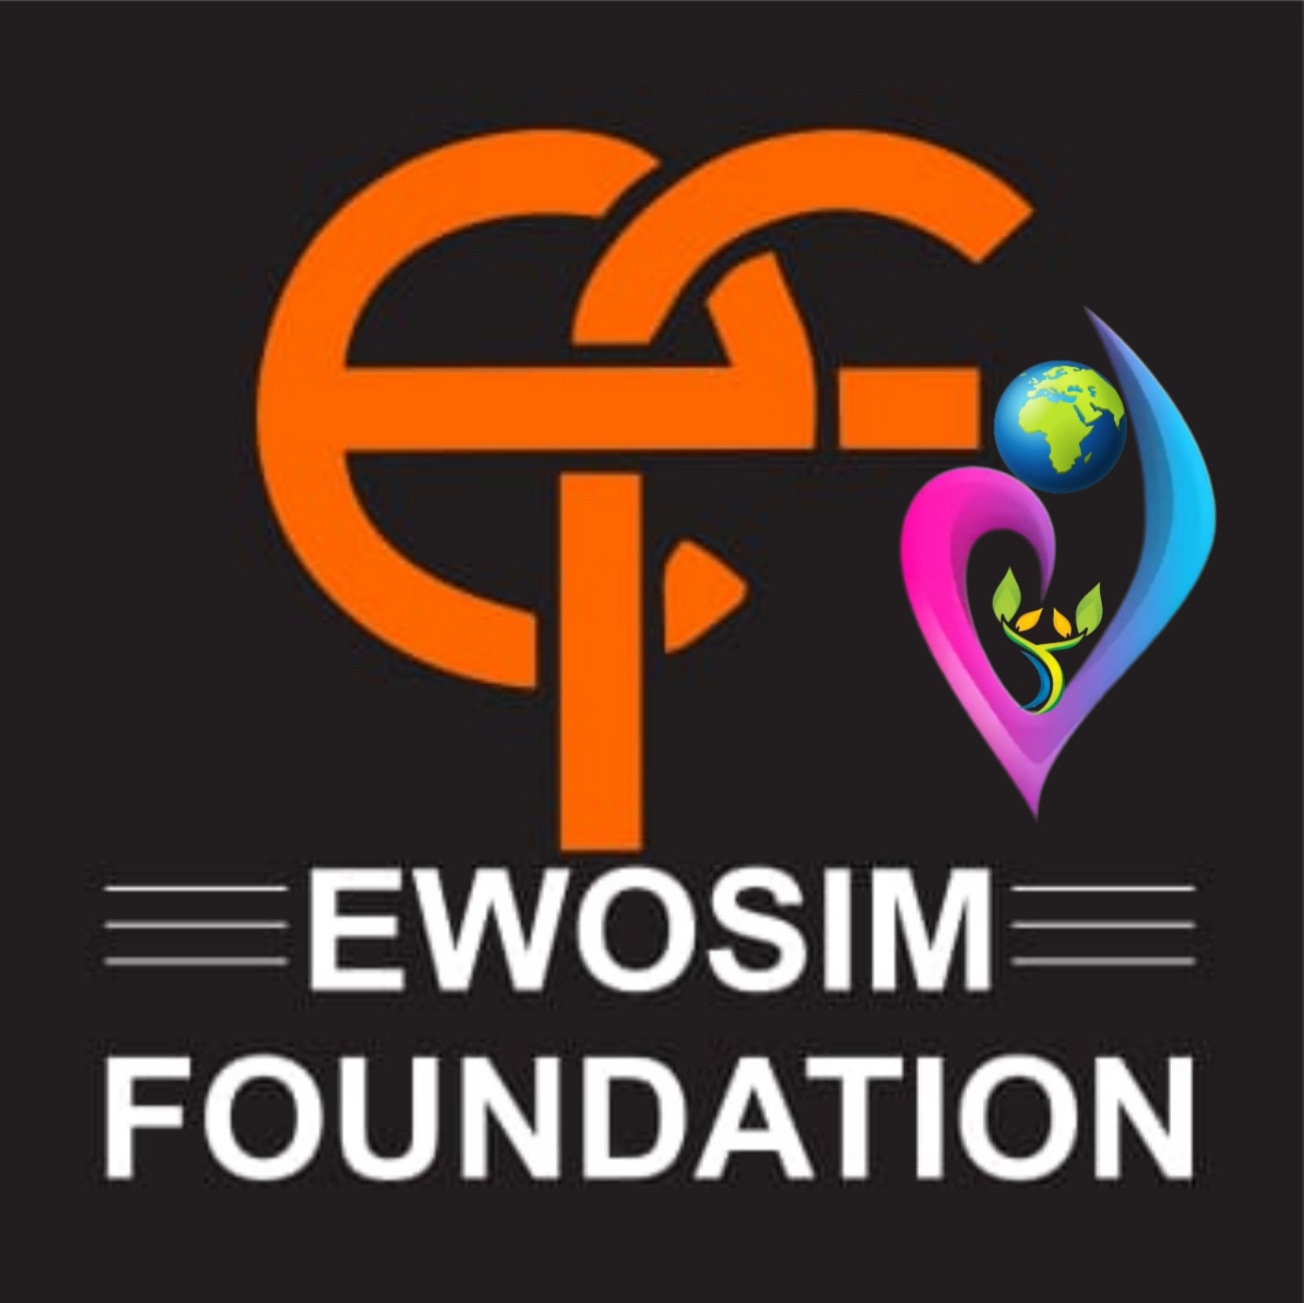 Ewosim Live Foundation